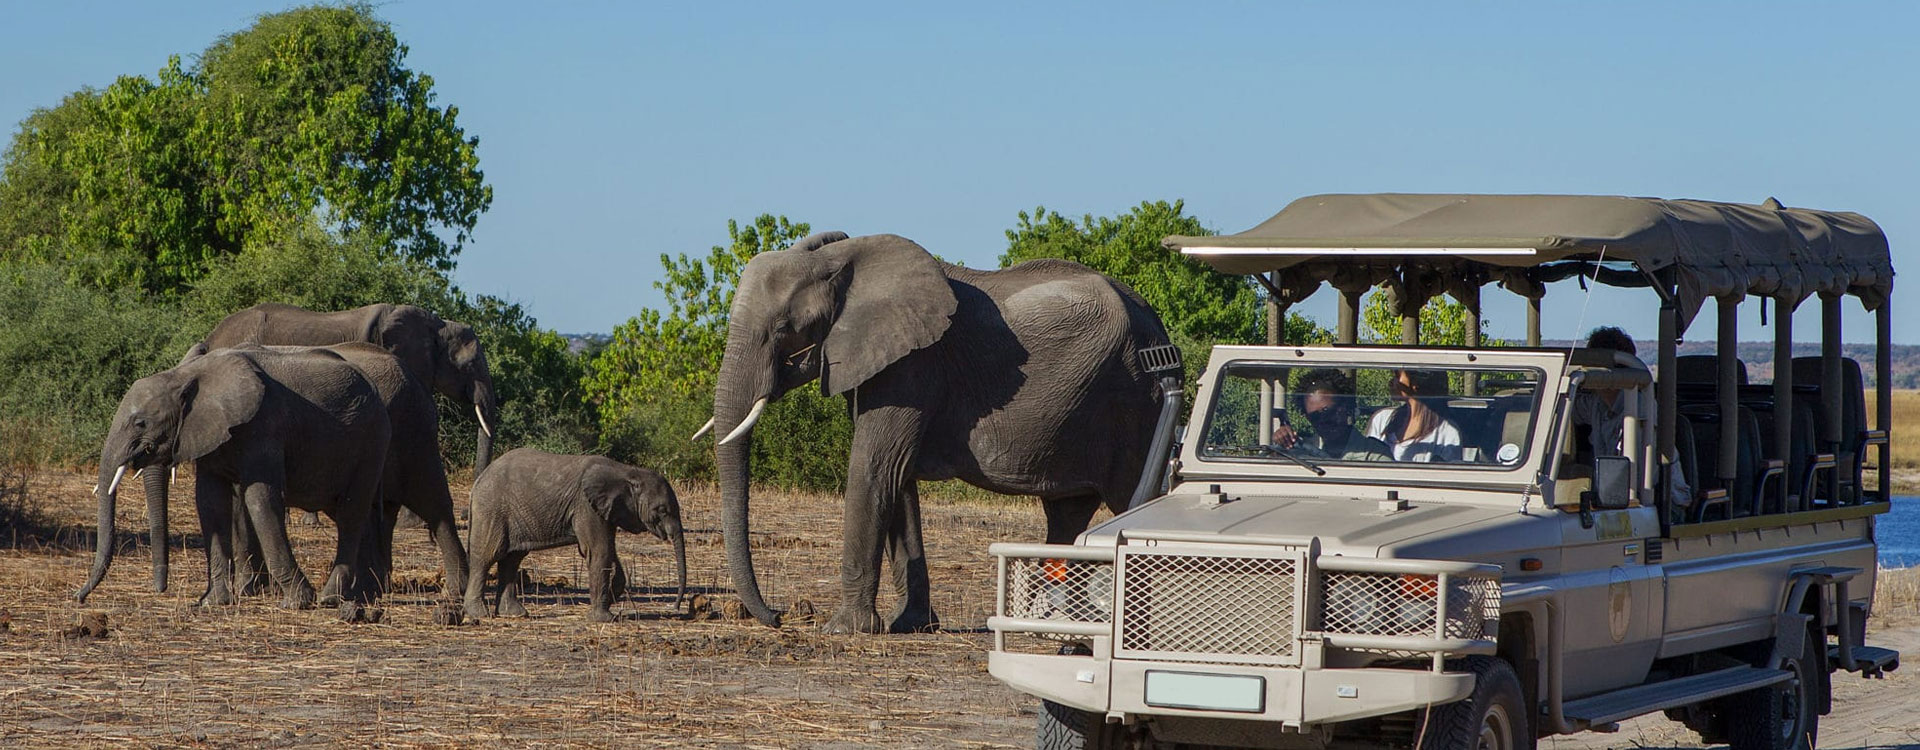 8 Day Chobe Savute & Moremi Botswana 4x4 Self-Drive Safari